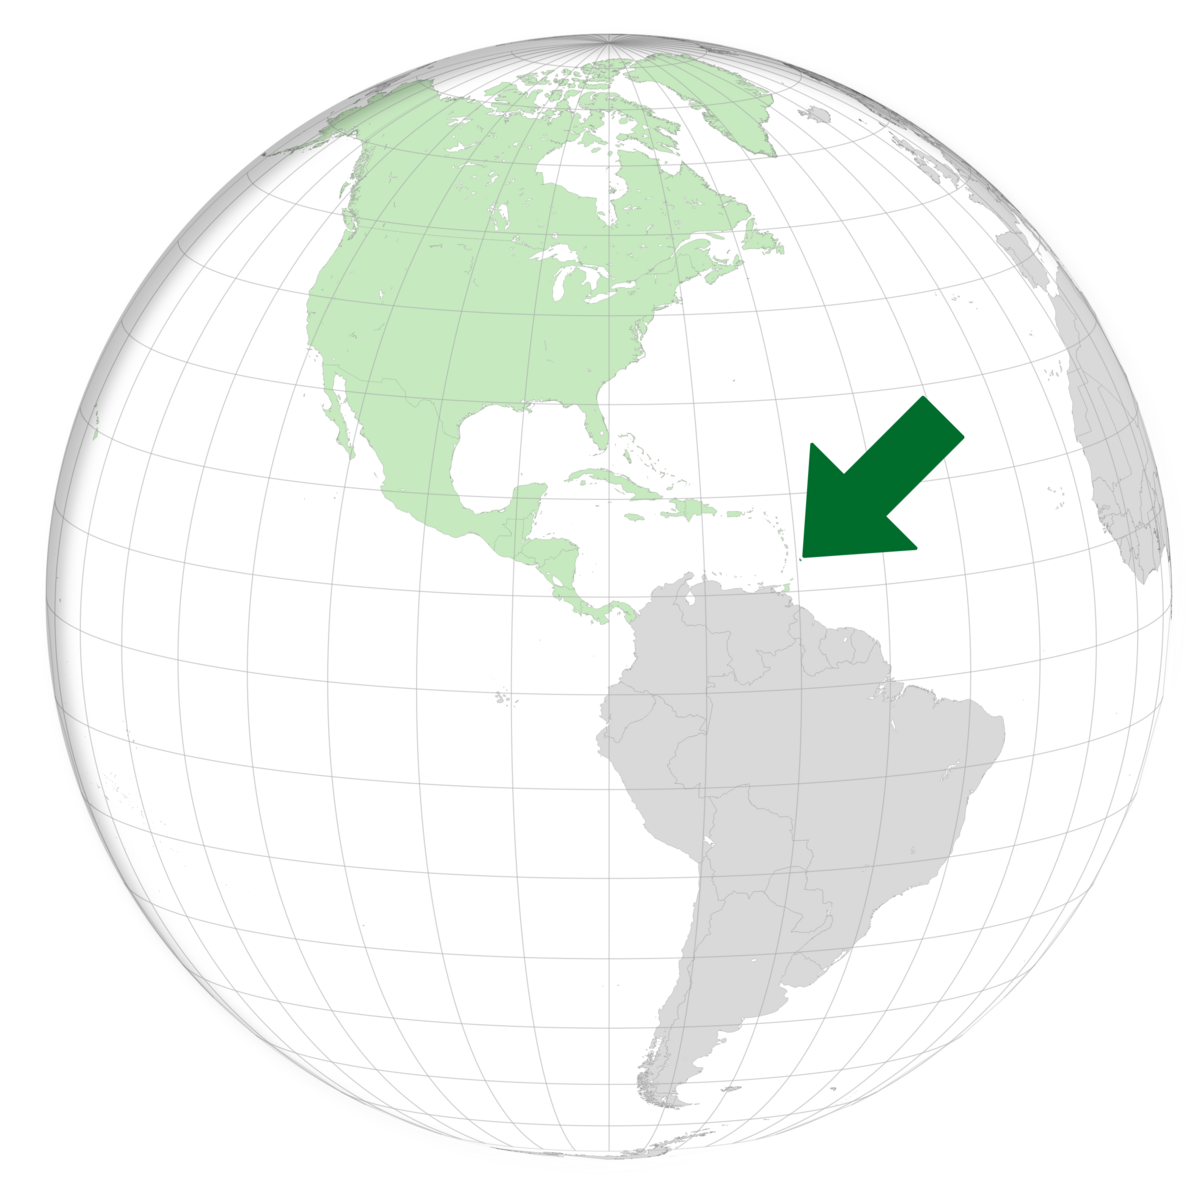 plassering av Barbados på jordkloden. Kart